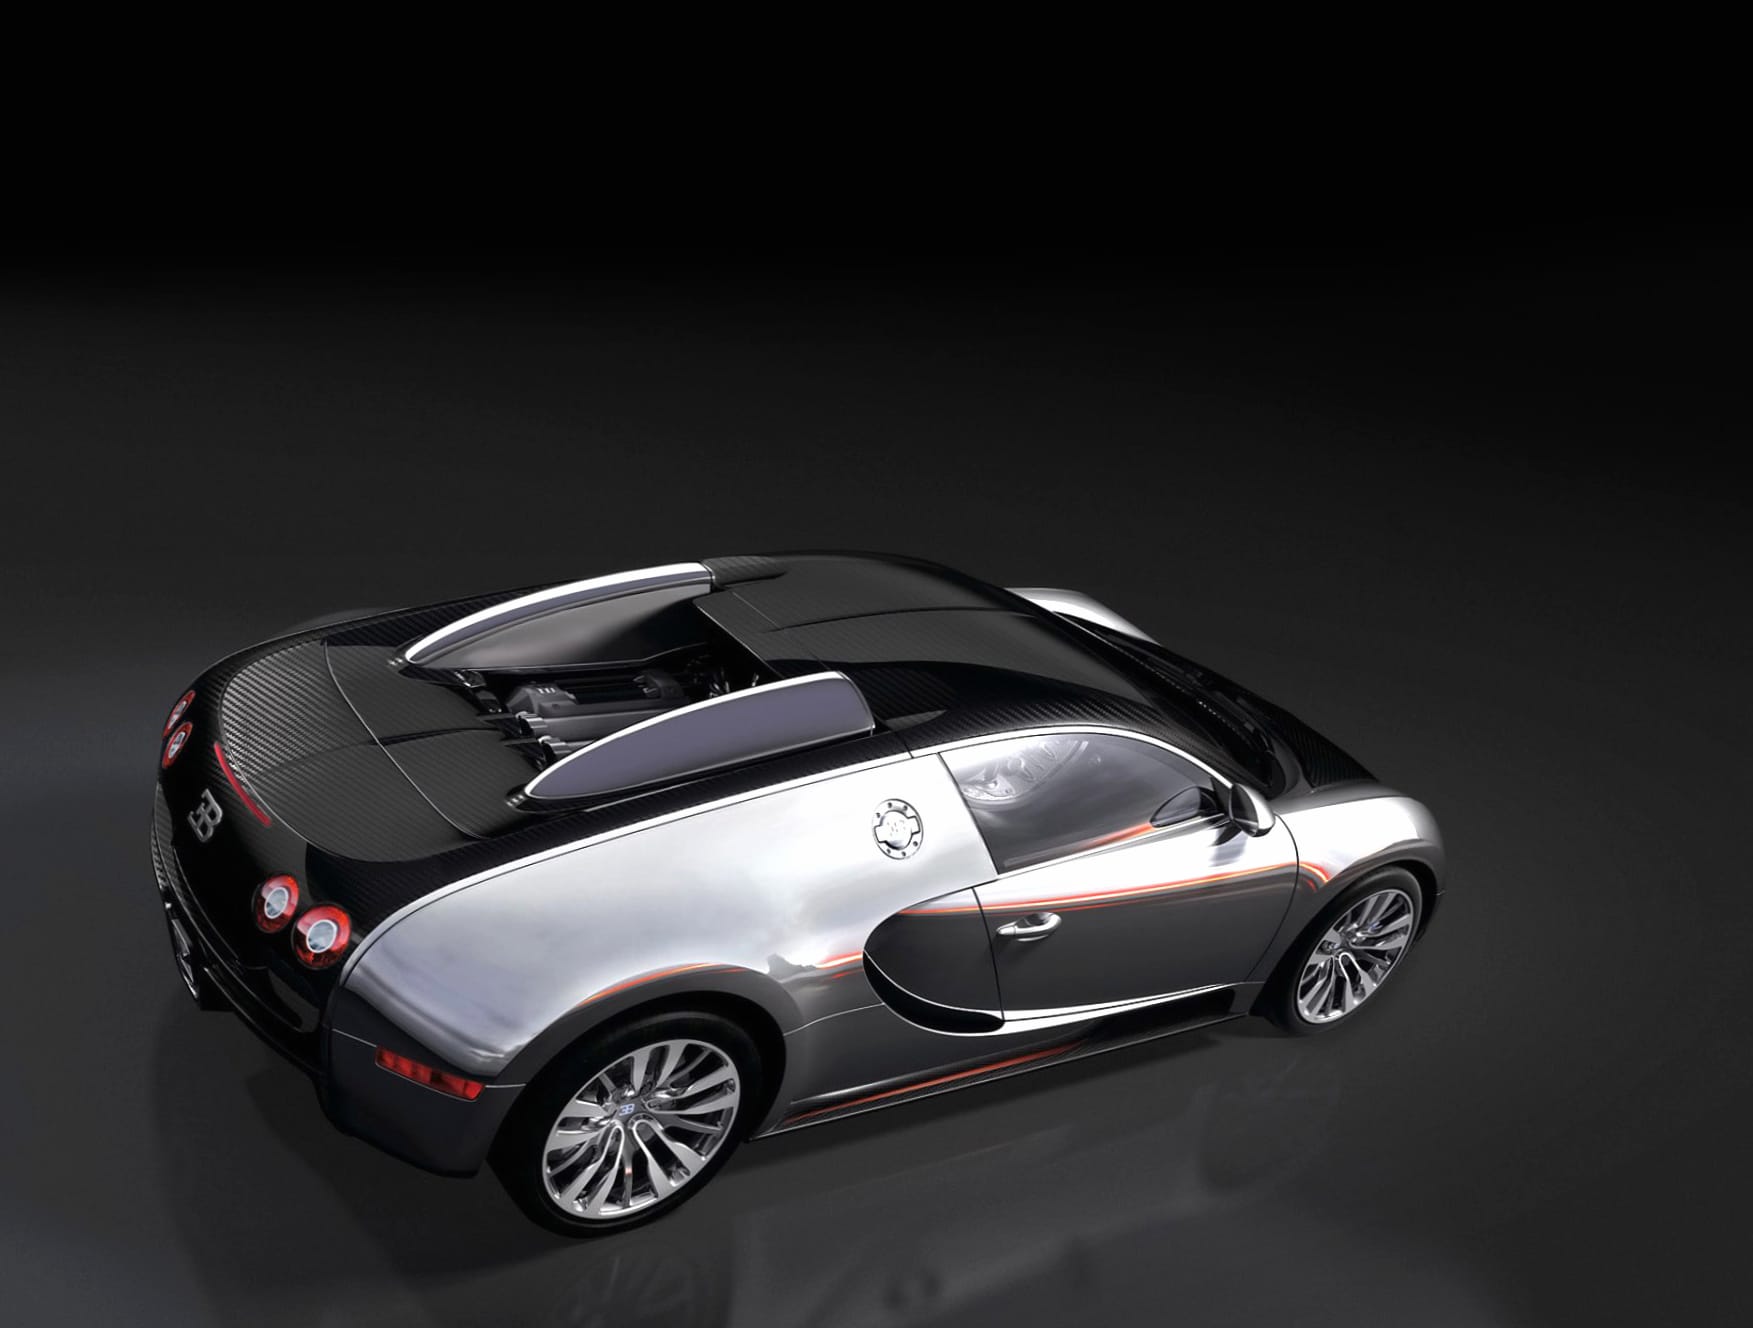 Bugatti Veyron 16-4 Pur Sang at 2048 x 2048 iPad size wallpapers HD quality